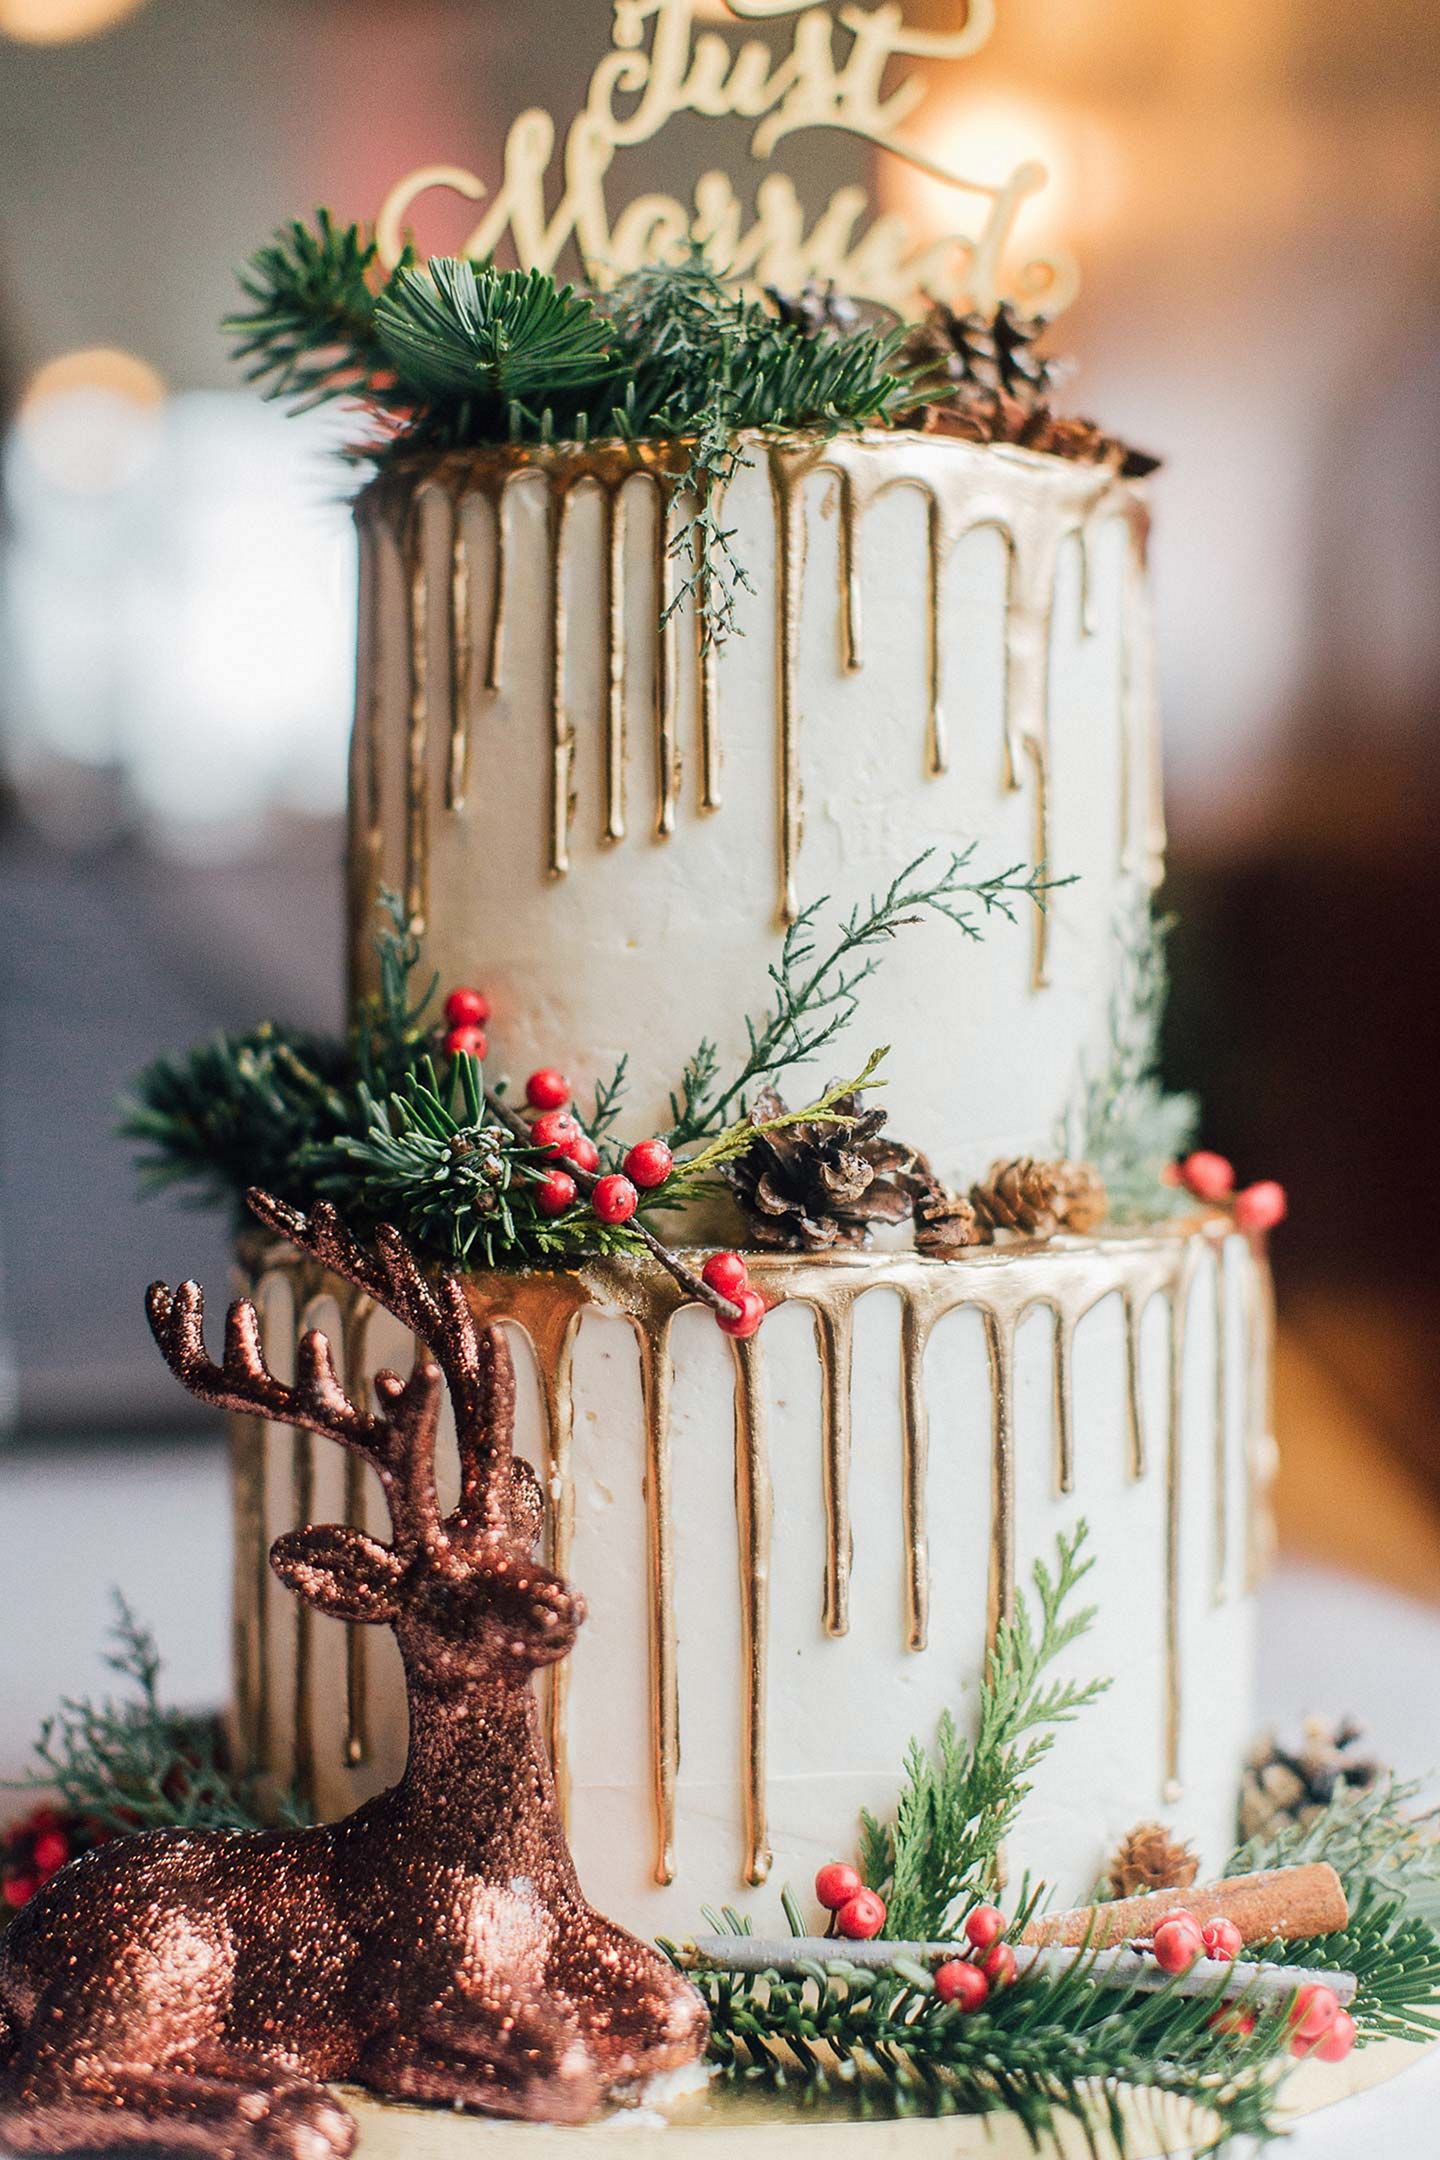 Christmas inspired wedding cakes from hochzeitswahn.de